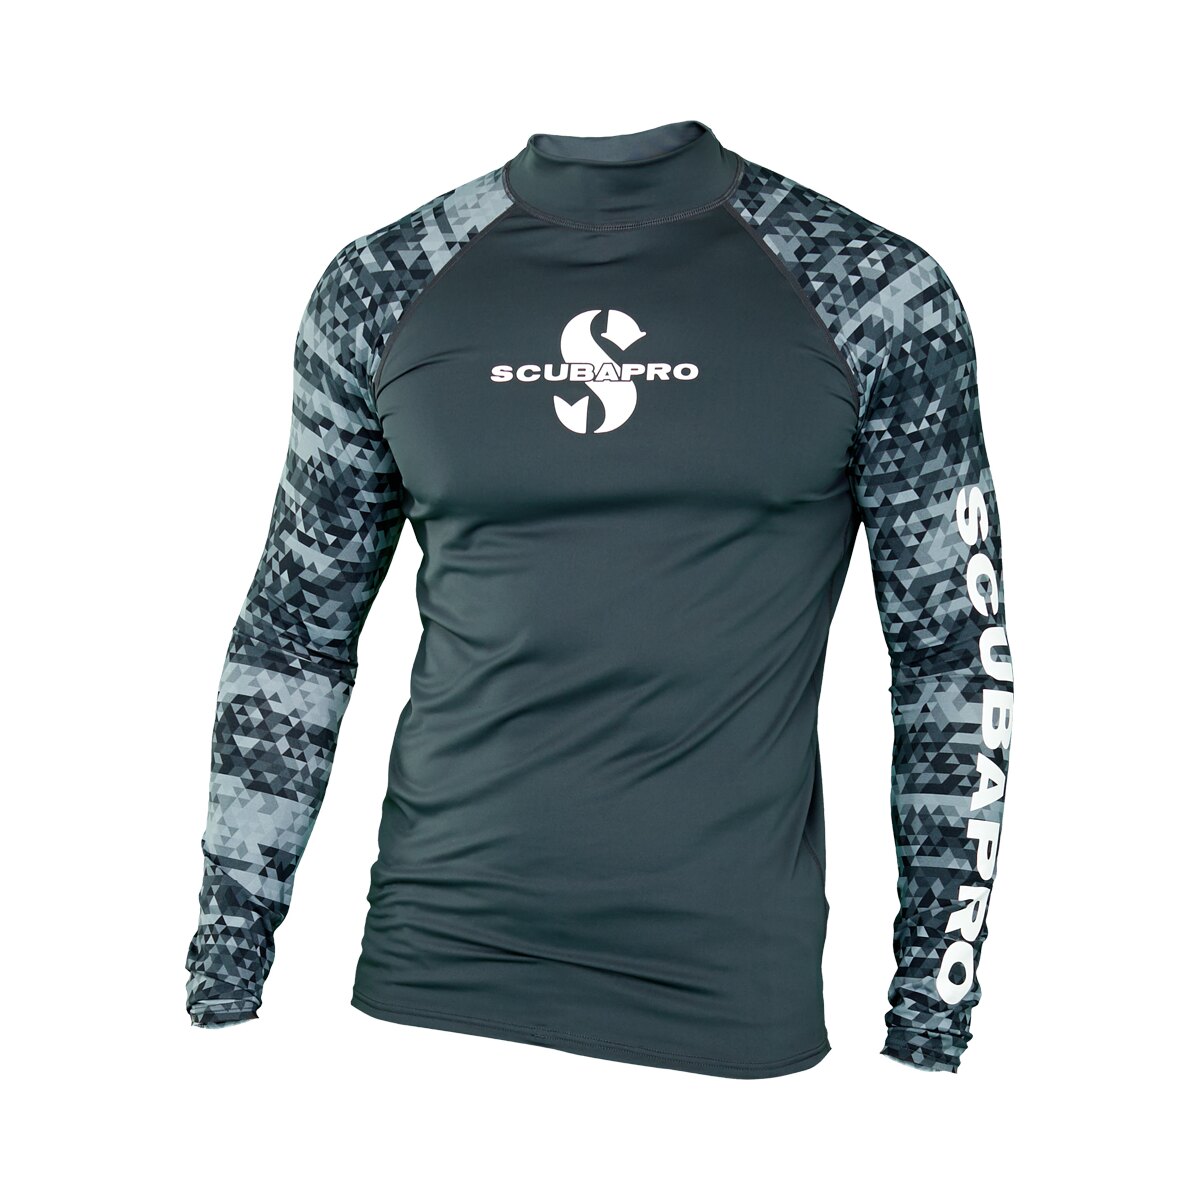 Scubapro GRAPHITE Rash Guard Kurzarm Herren Slim Fit UV-Shirt Collection 2019 